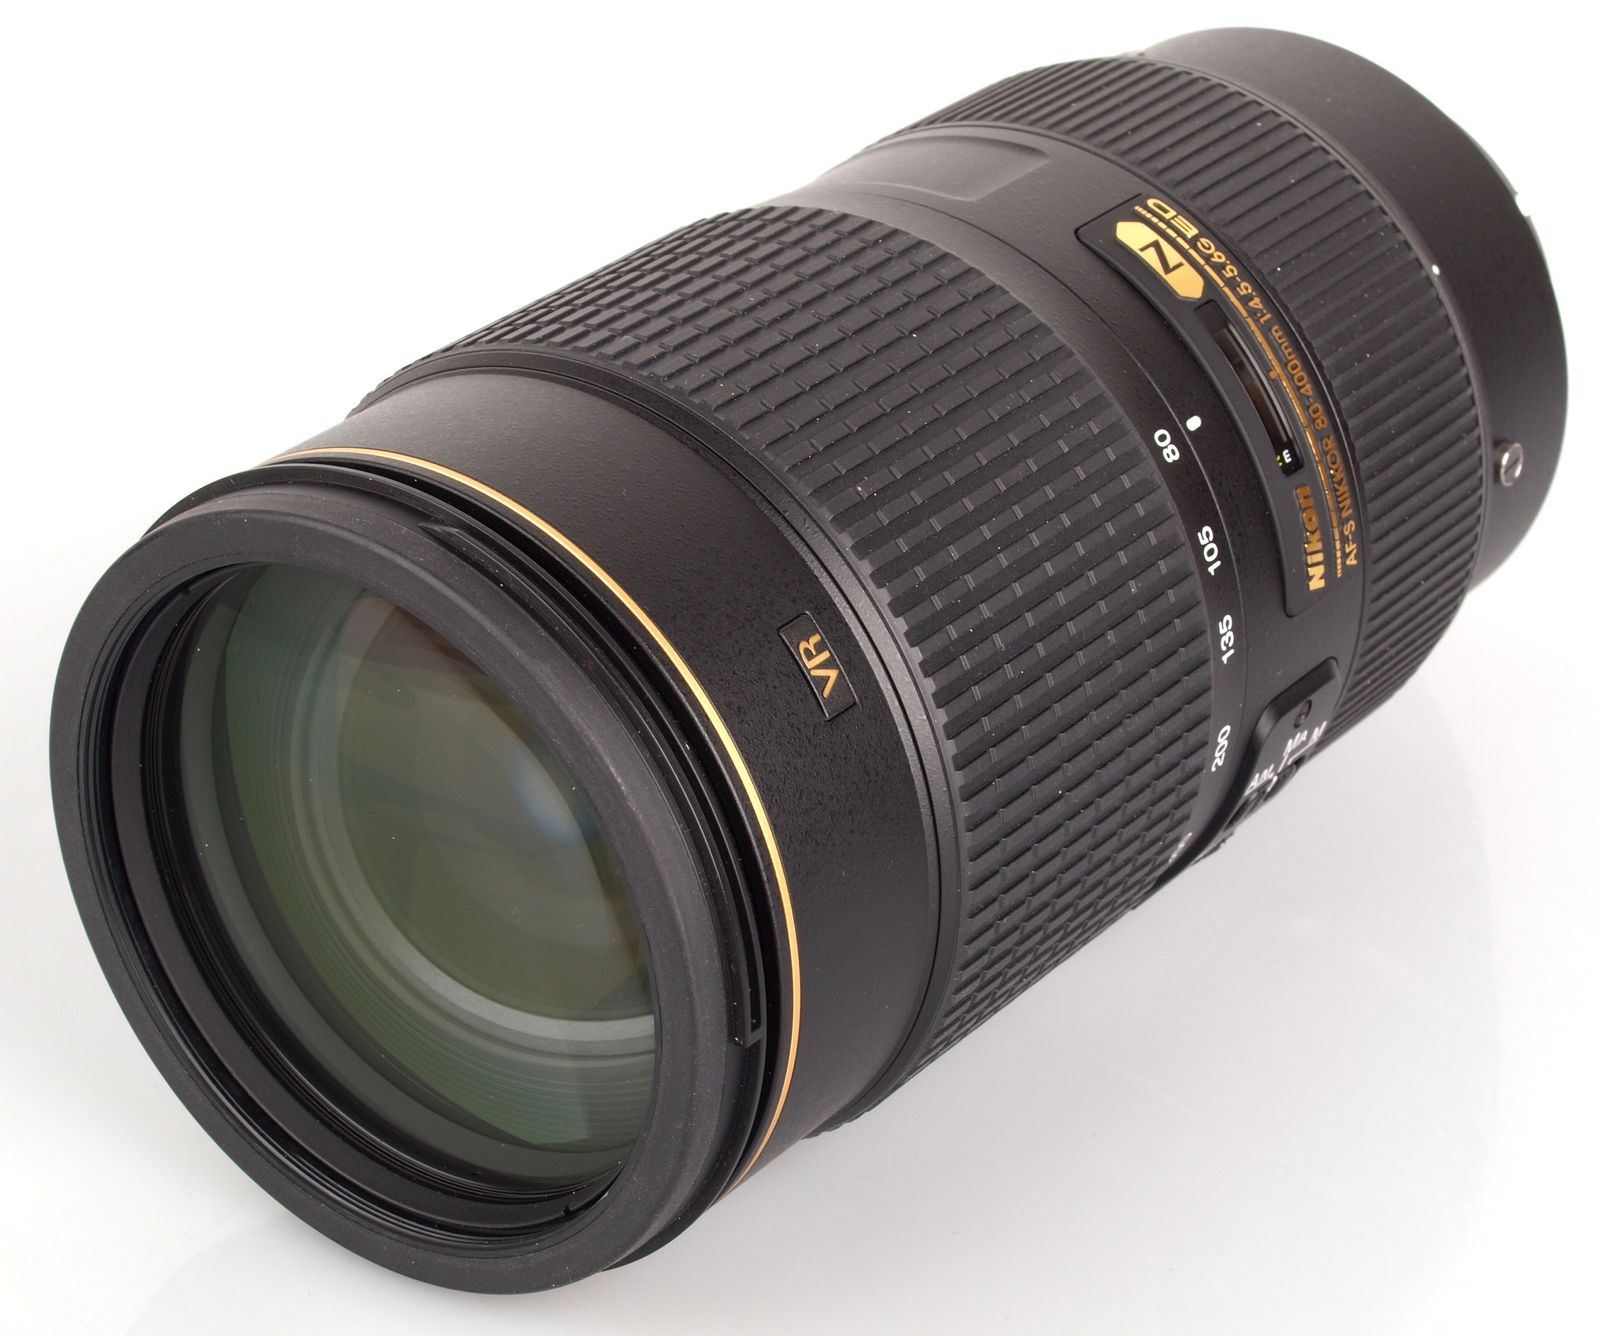 Nikon NIKKOR 80-400mm f/4.5-5.6G ED VR II Review